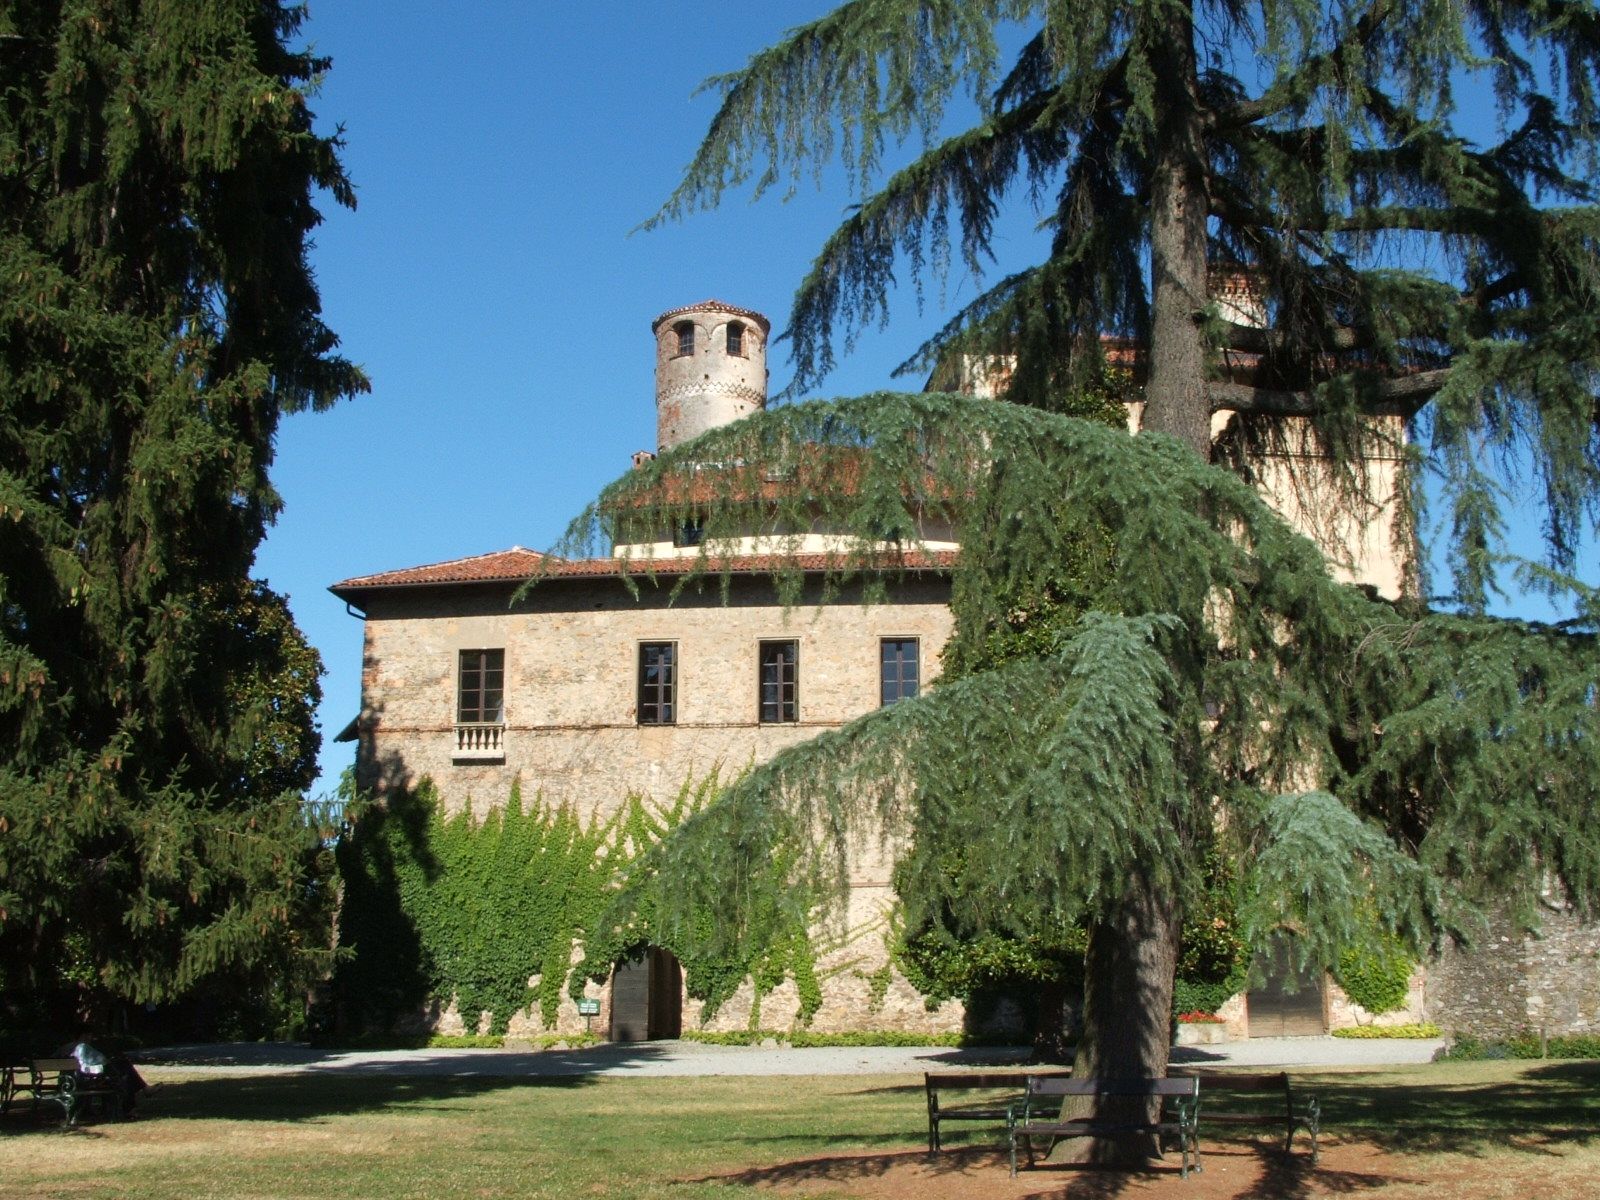 Castle of Manta, Manta di Saluzzo, Piedmont, Italy